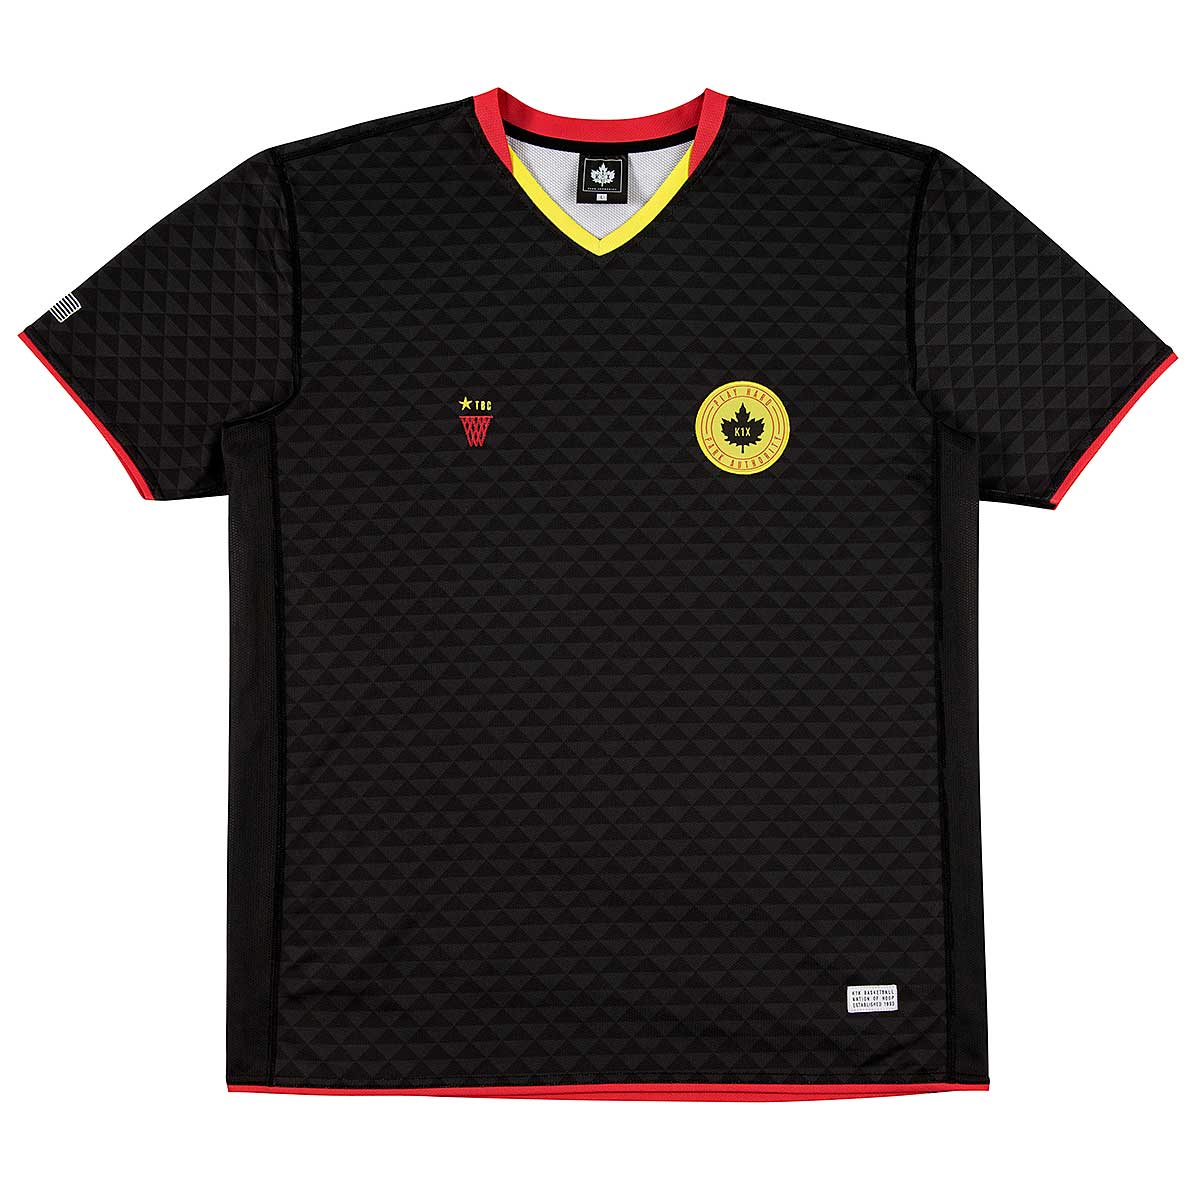 K1X Noh Soccer Jersey, Black/Lime/Red